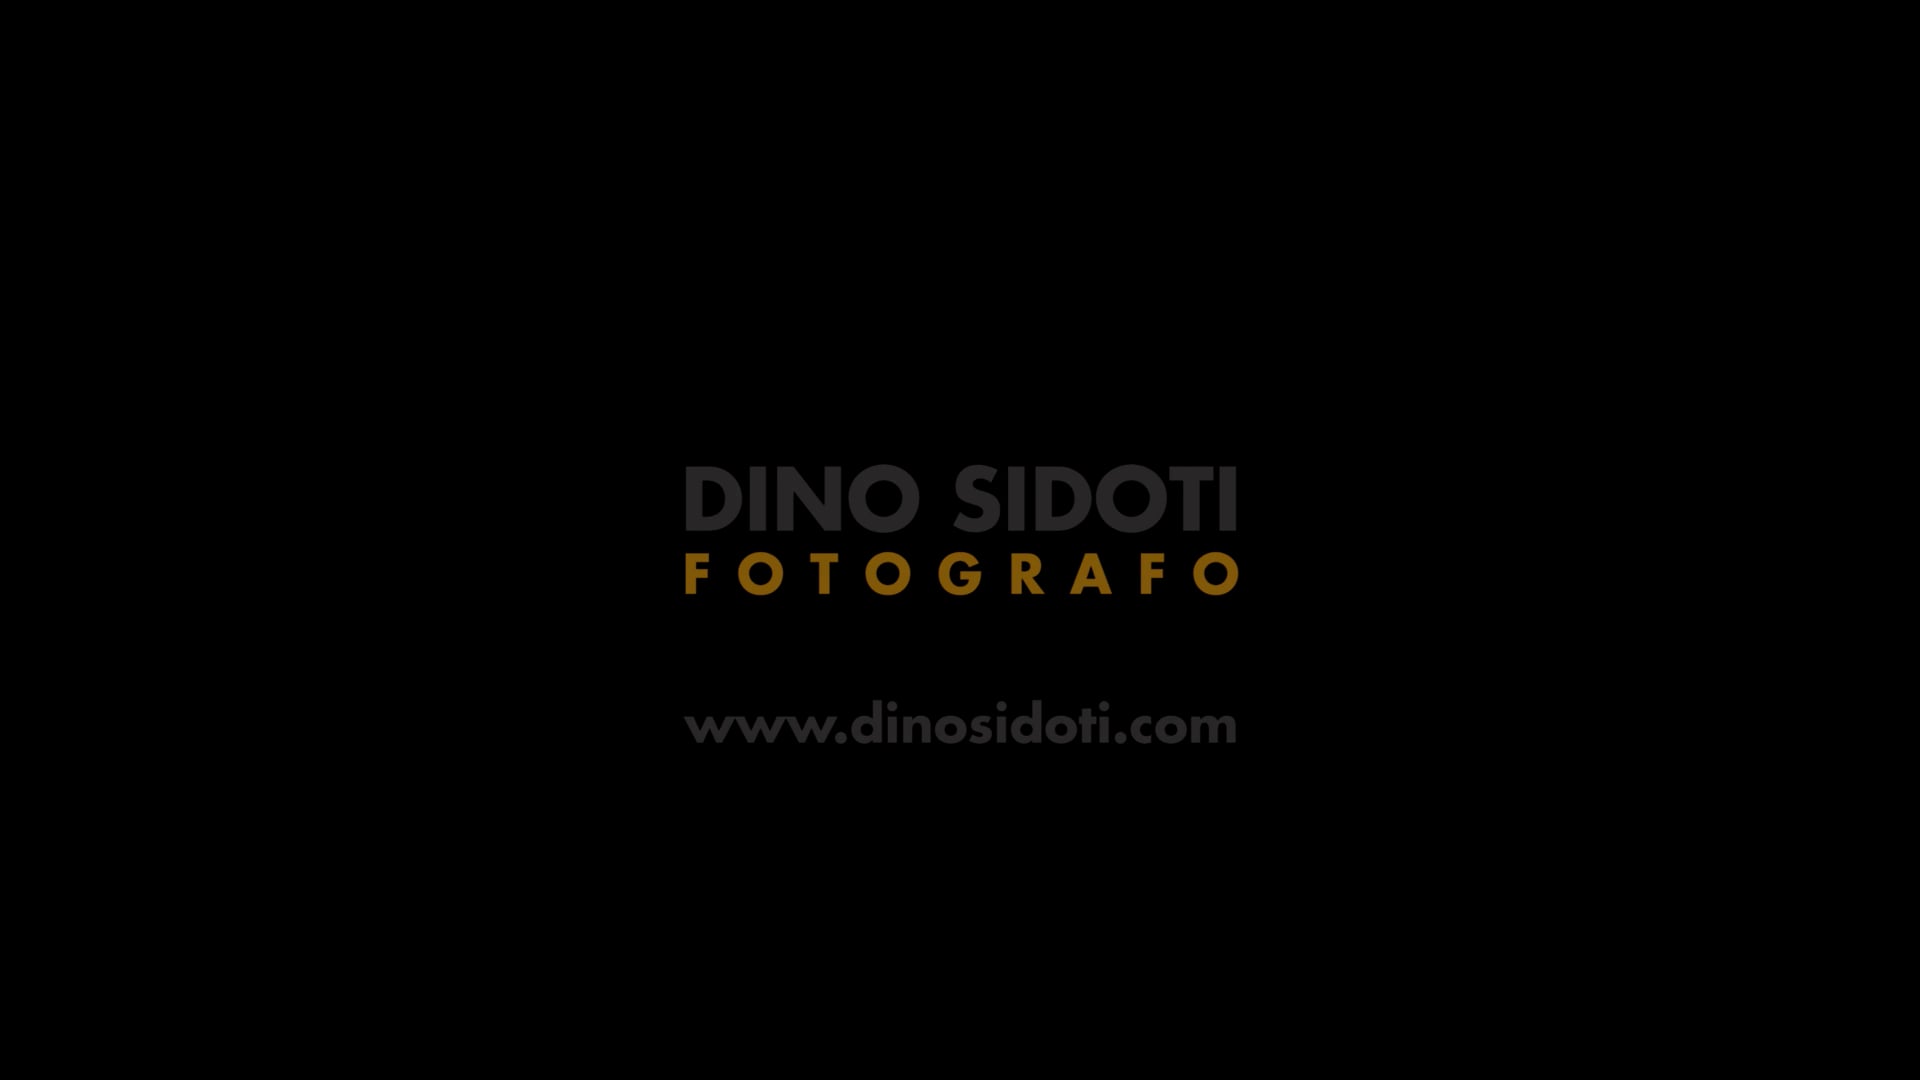 Dino Sidoti fotografo